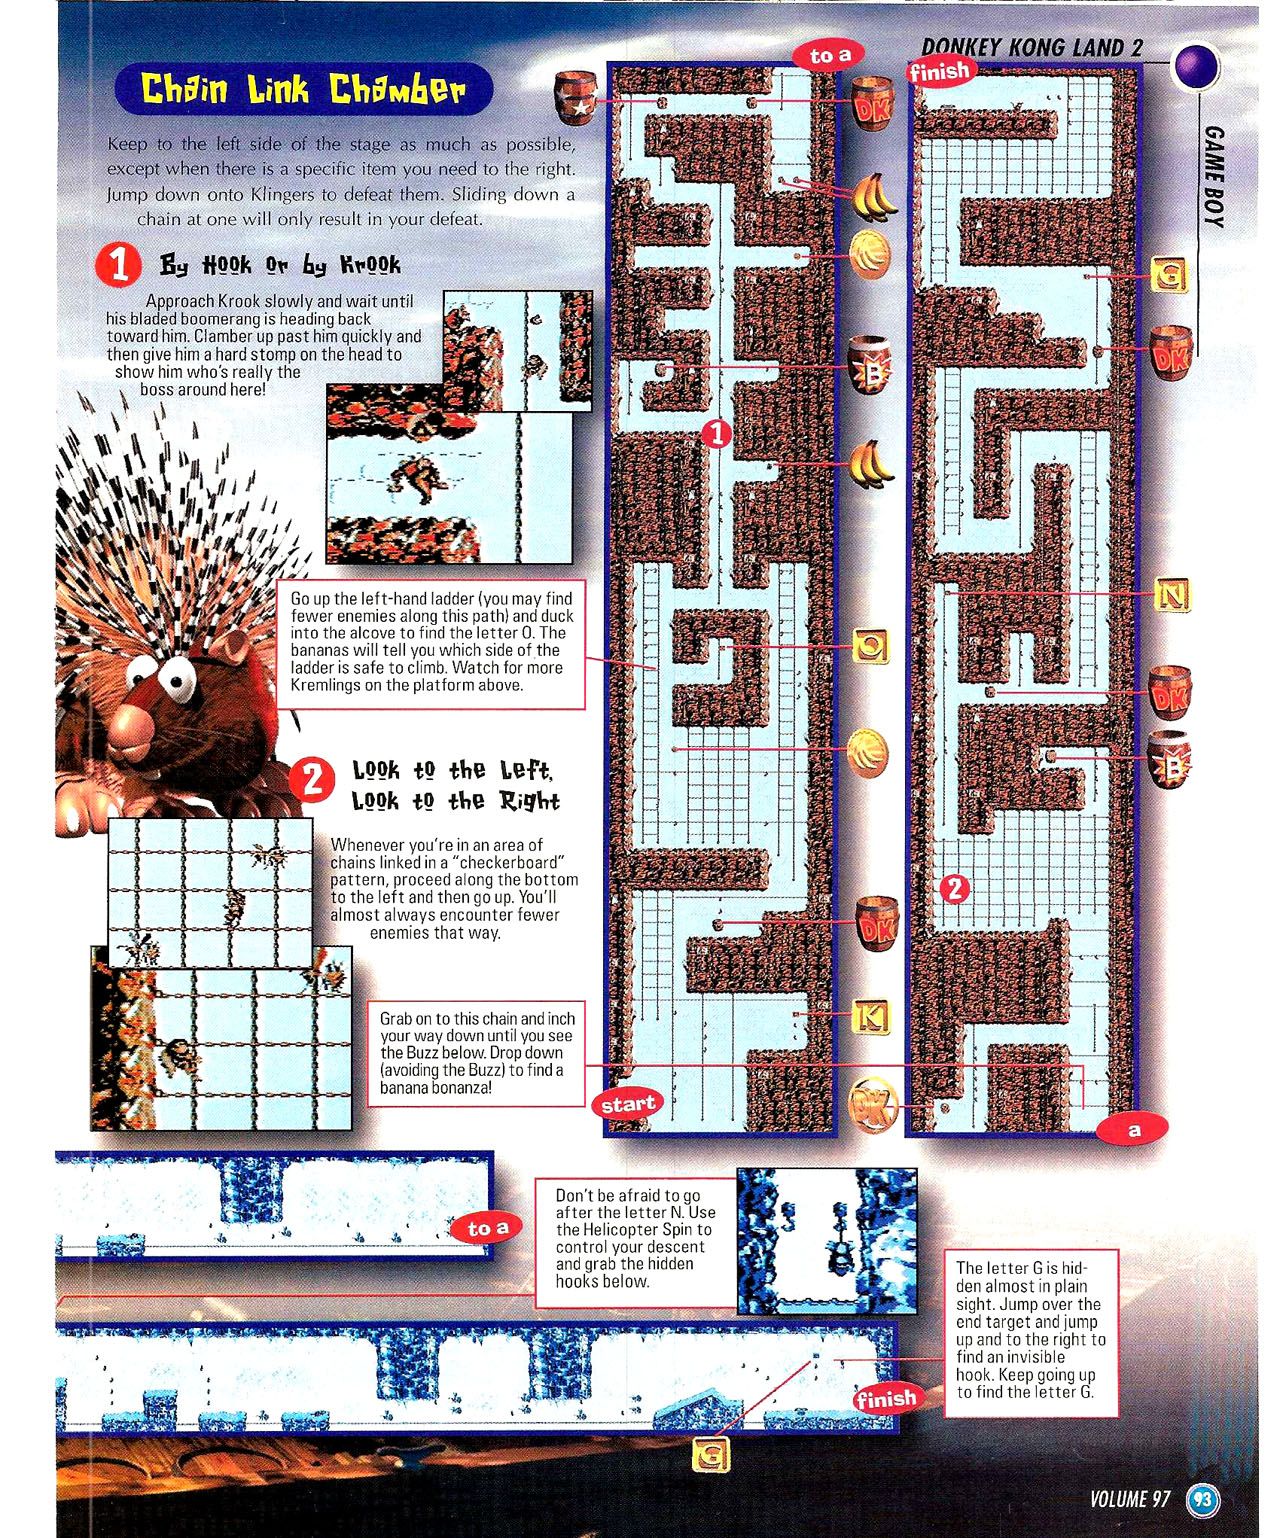 Read online Nintendo Power comic -  Issue #97 - 104